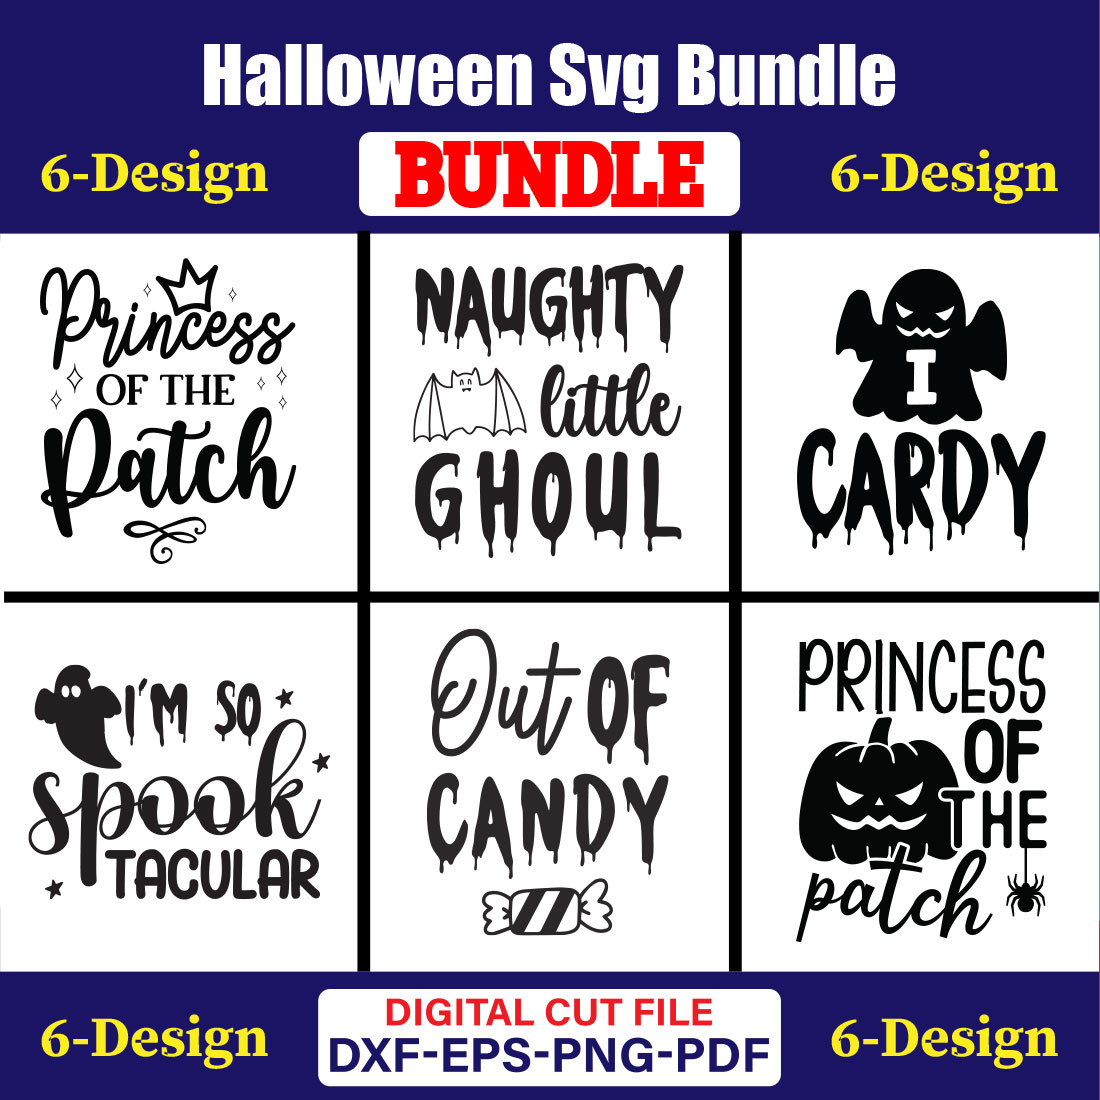 Halloween T-shirt Design Bundle Vol-8 cover image.